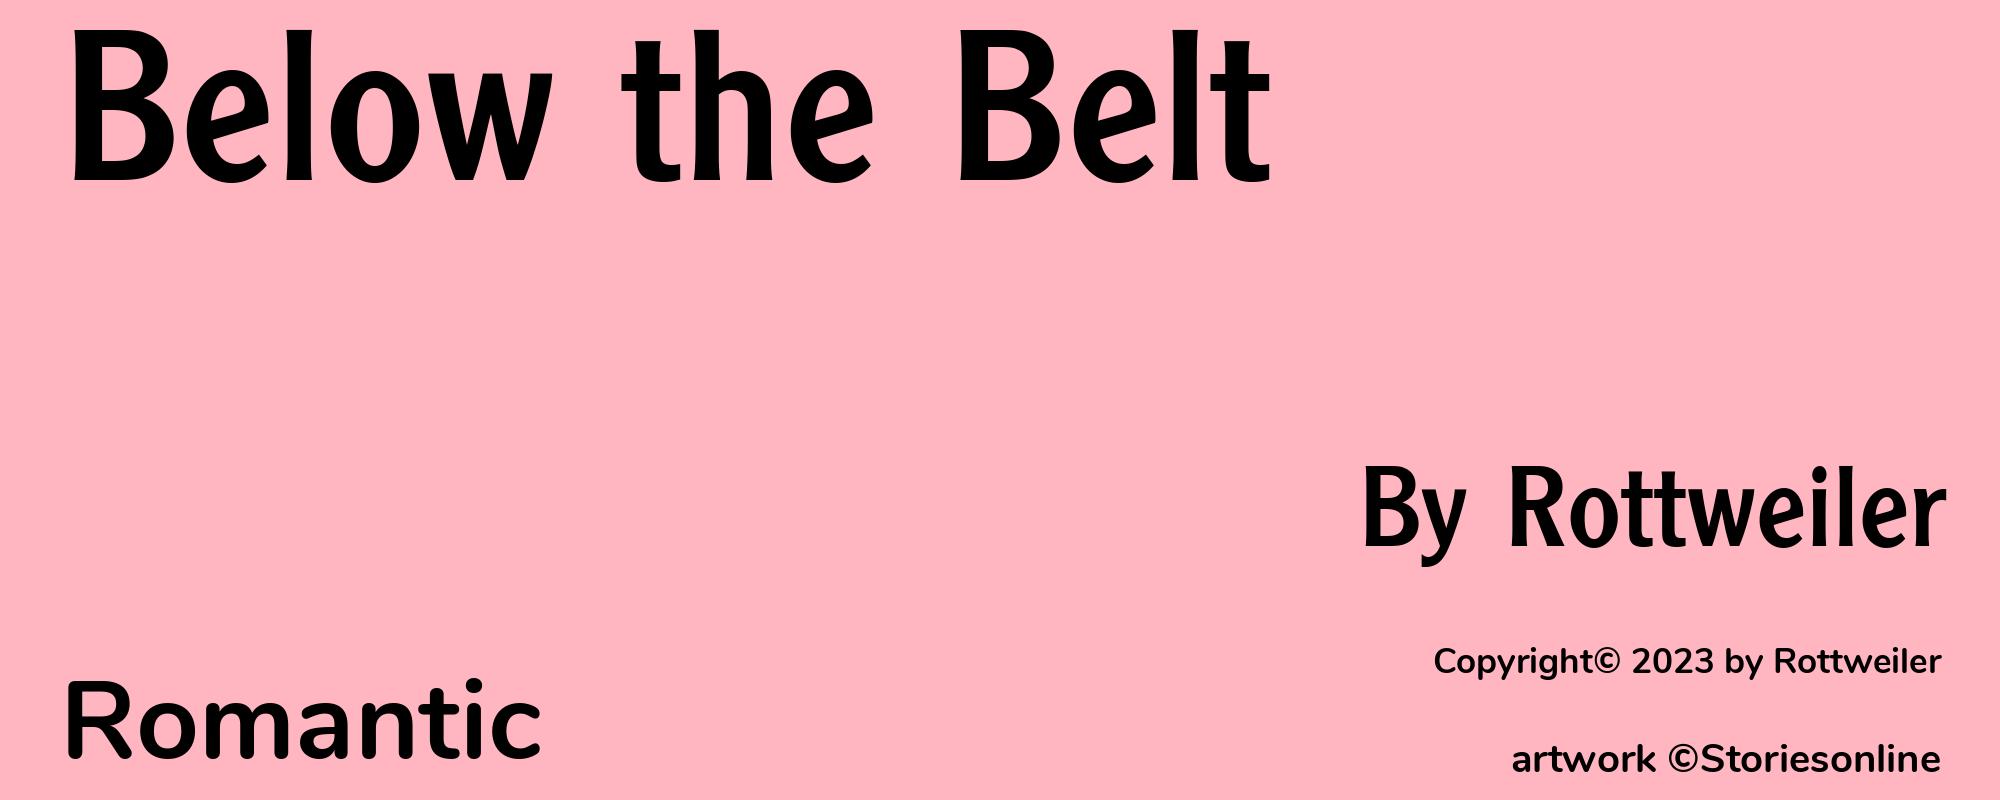 Below the Belt - Cover